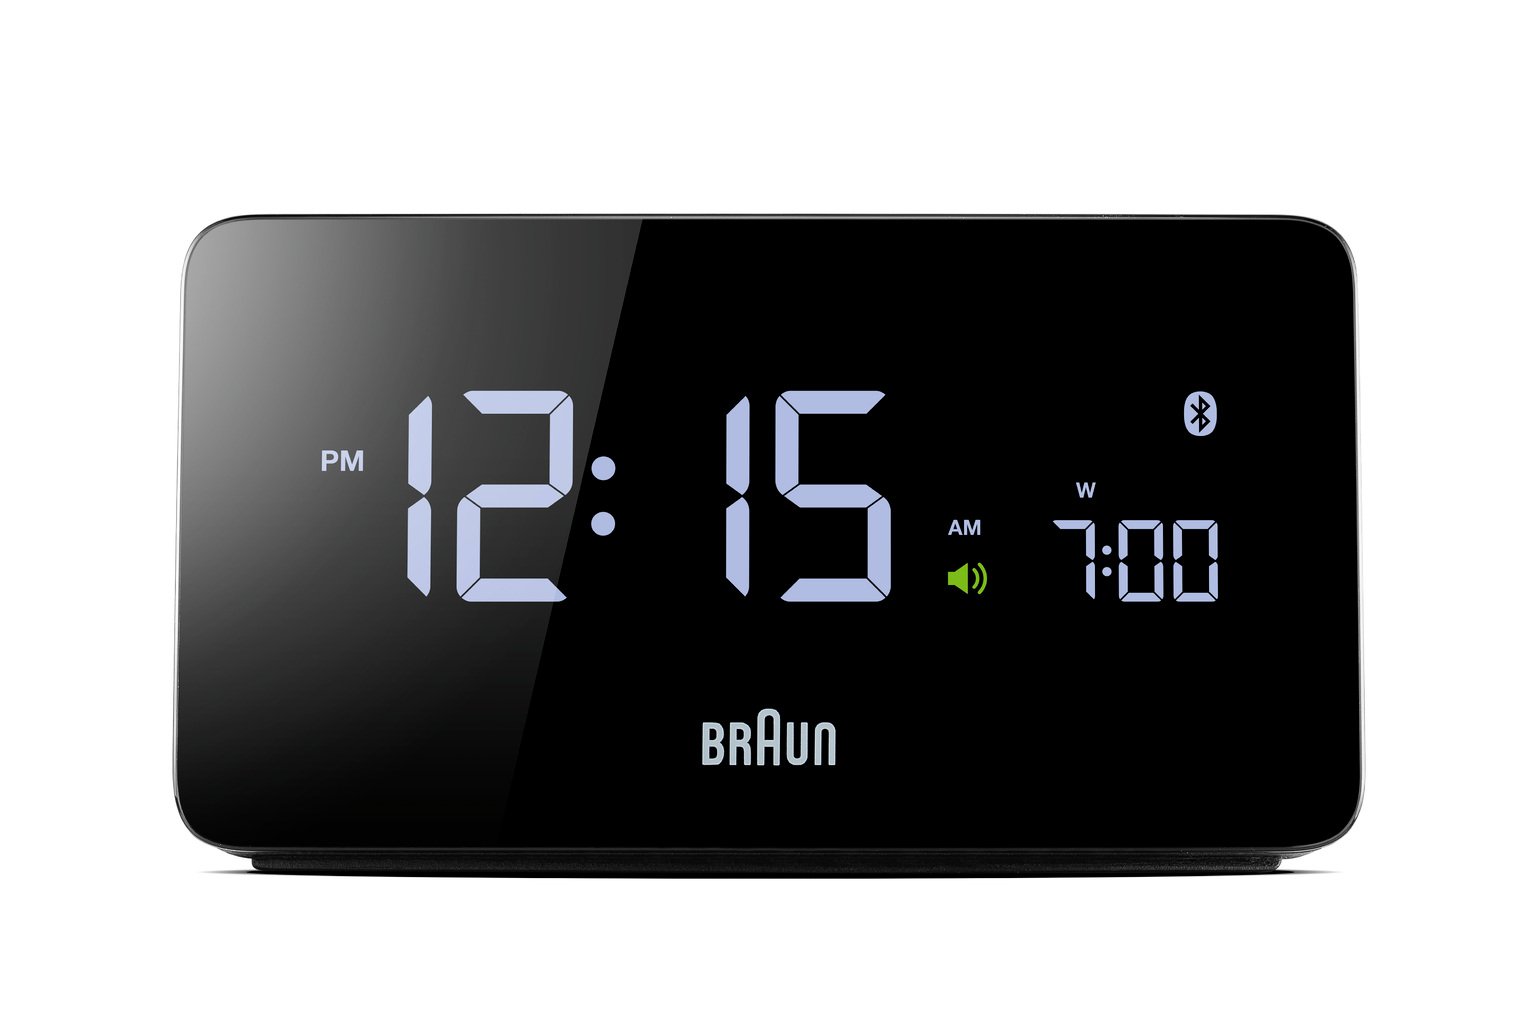 Braun Bluetooth Alarm Clock Review